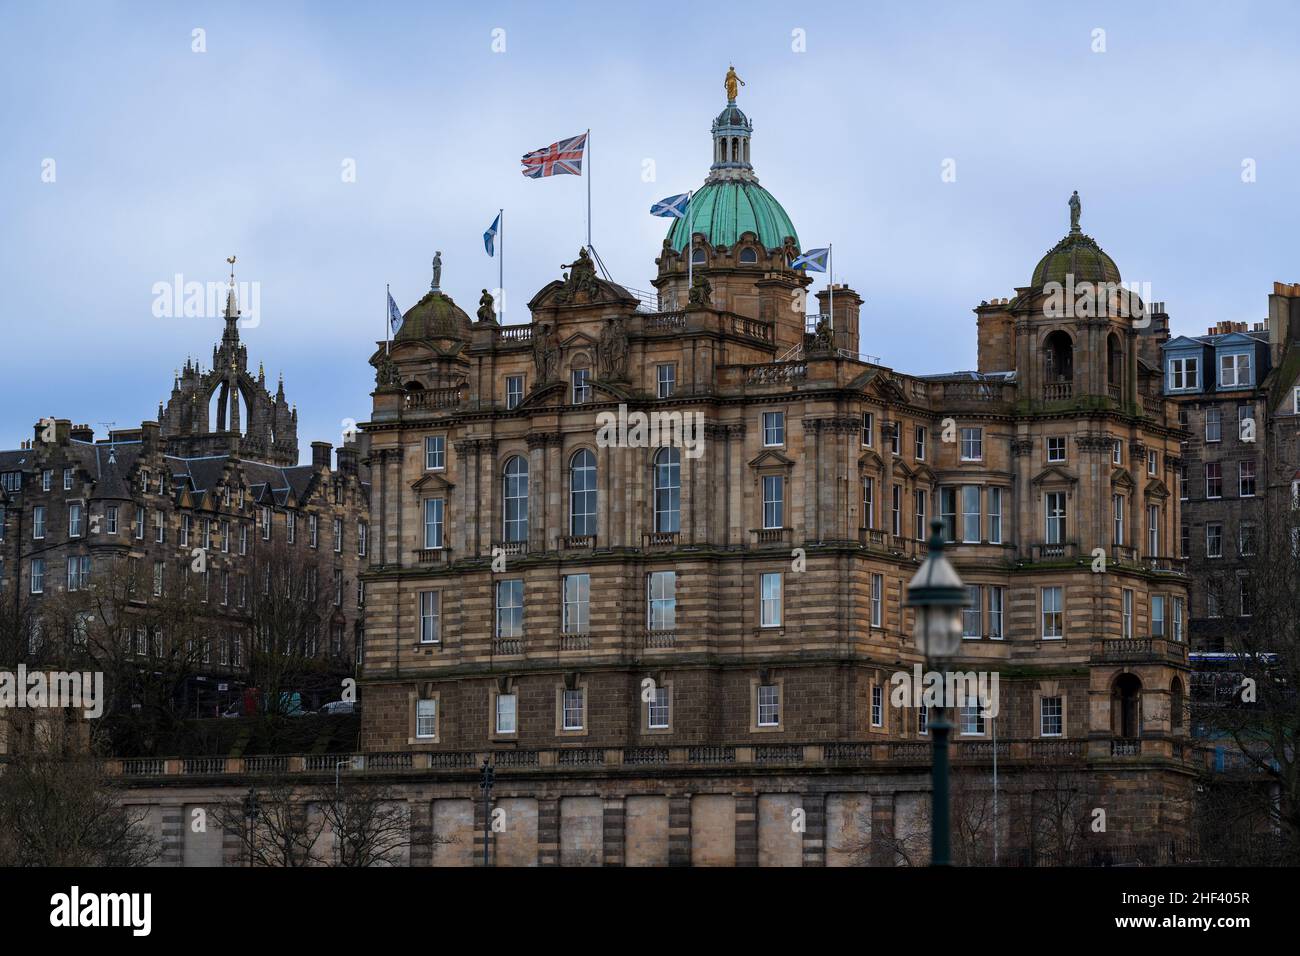 Vista nocturna de edificios históricos en el casco antiguo de Edimburgo, Escocia, Reino Unido Foto de stock